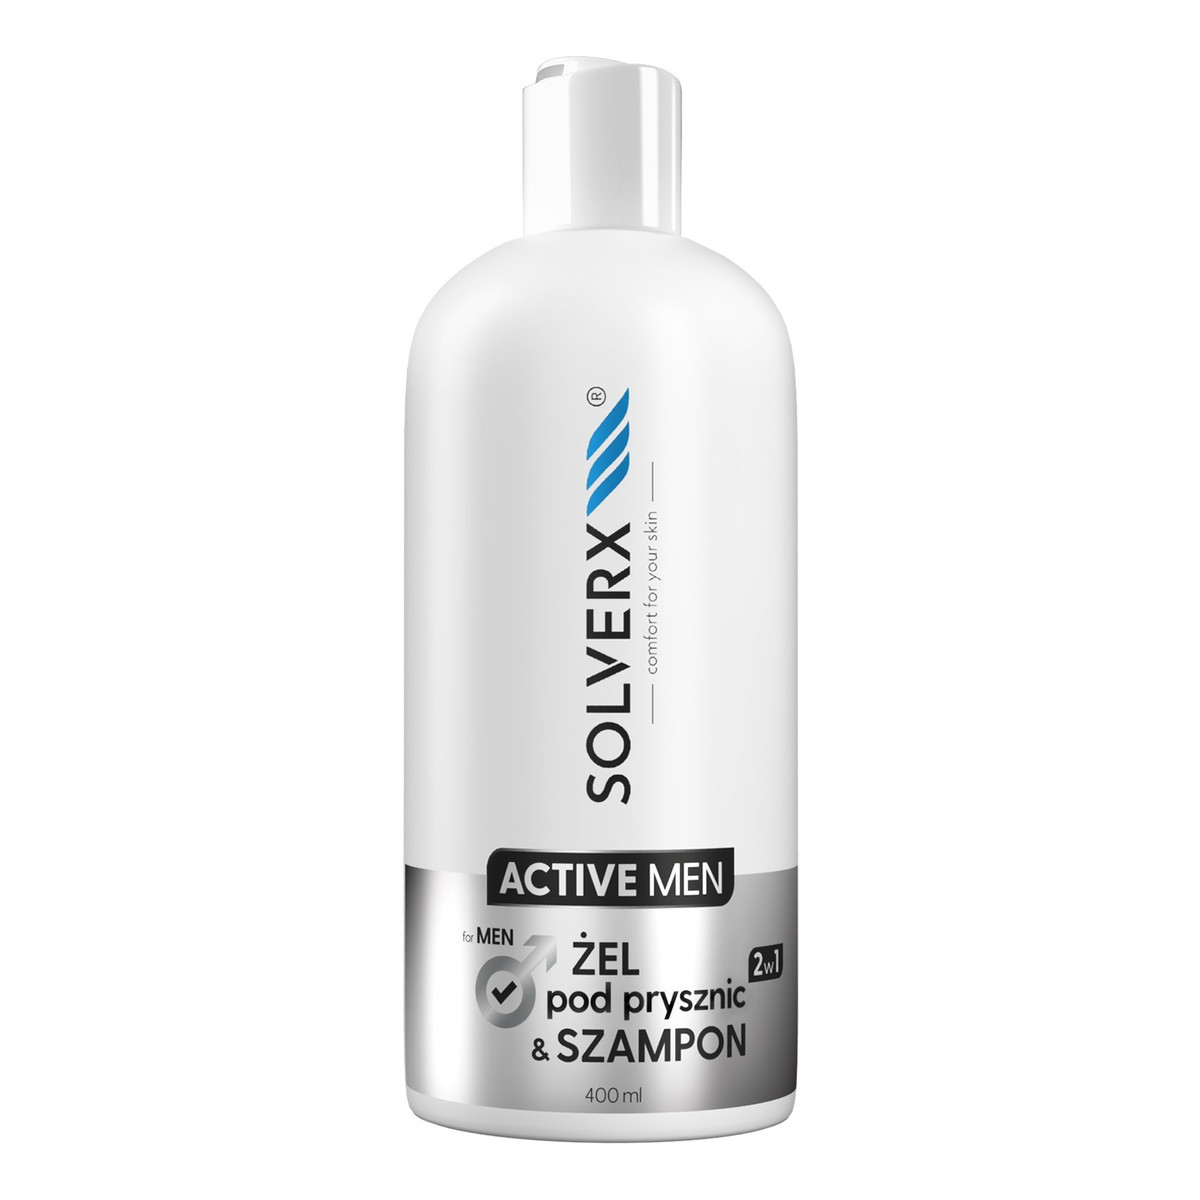 Solverx Active Men Żel & szampon 2w1 400ml